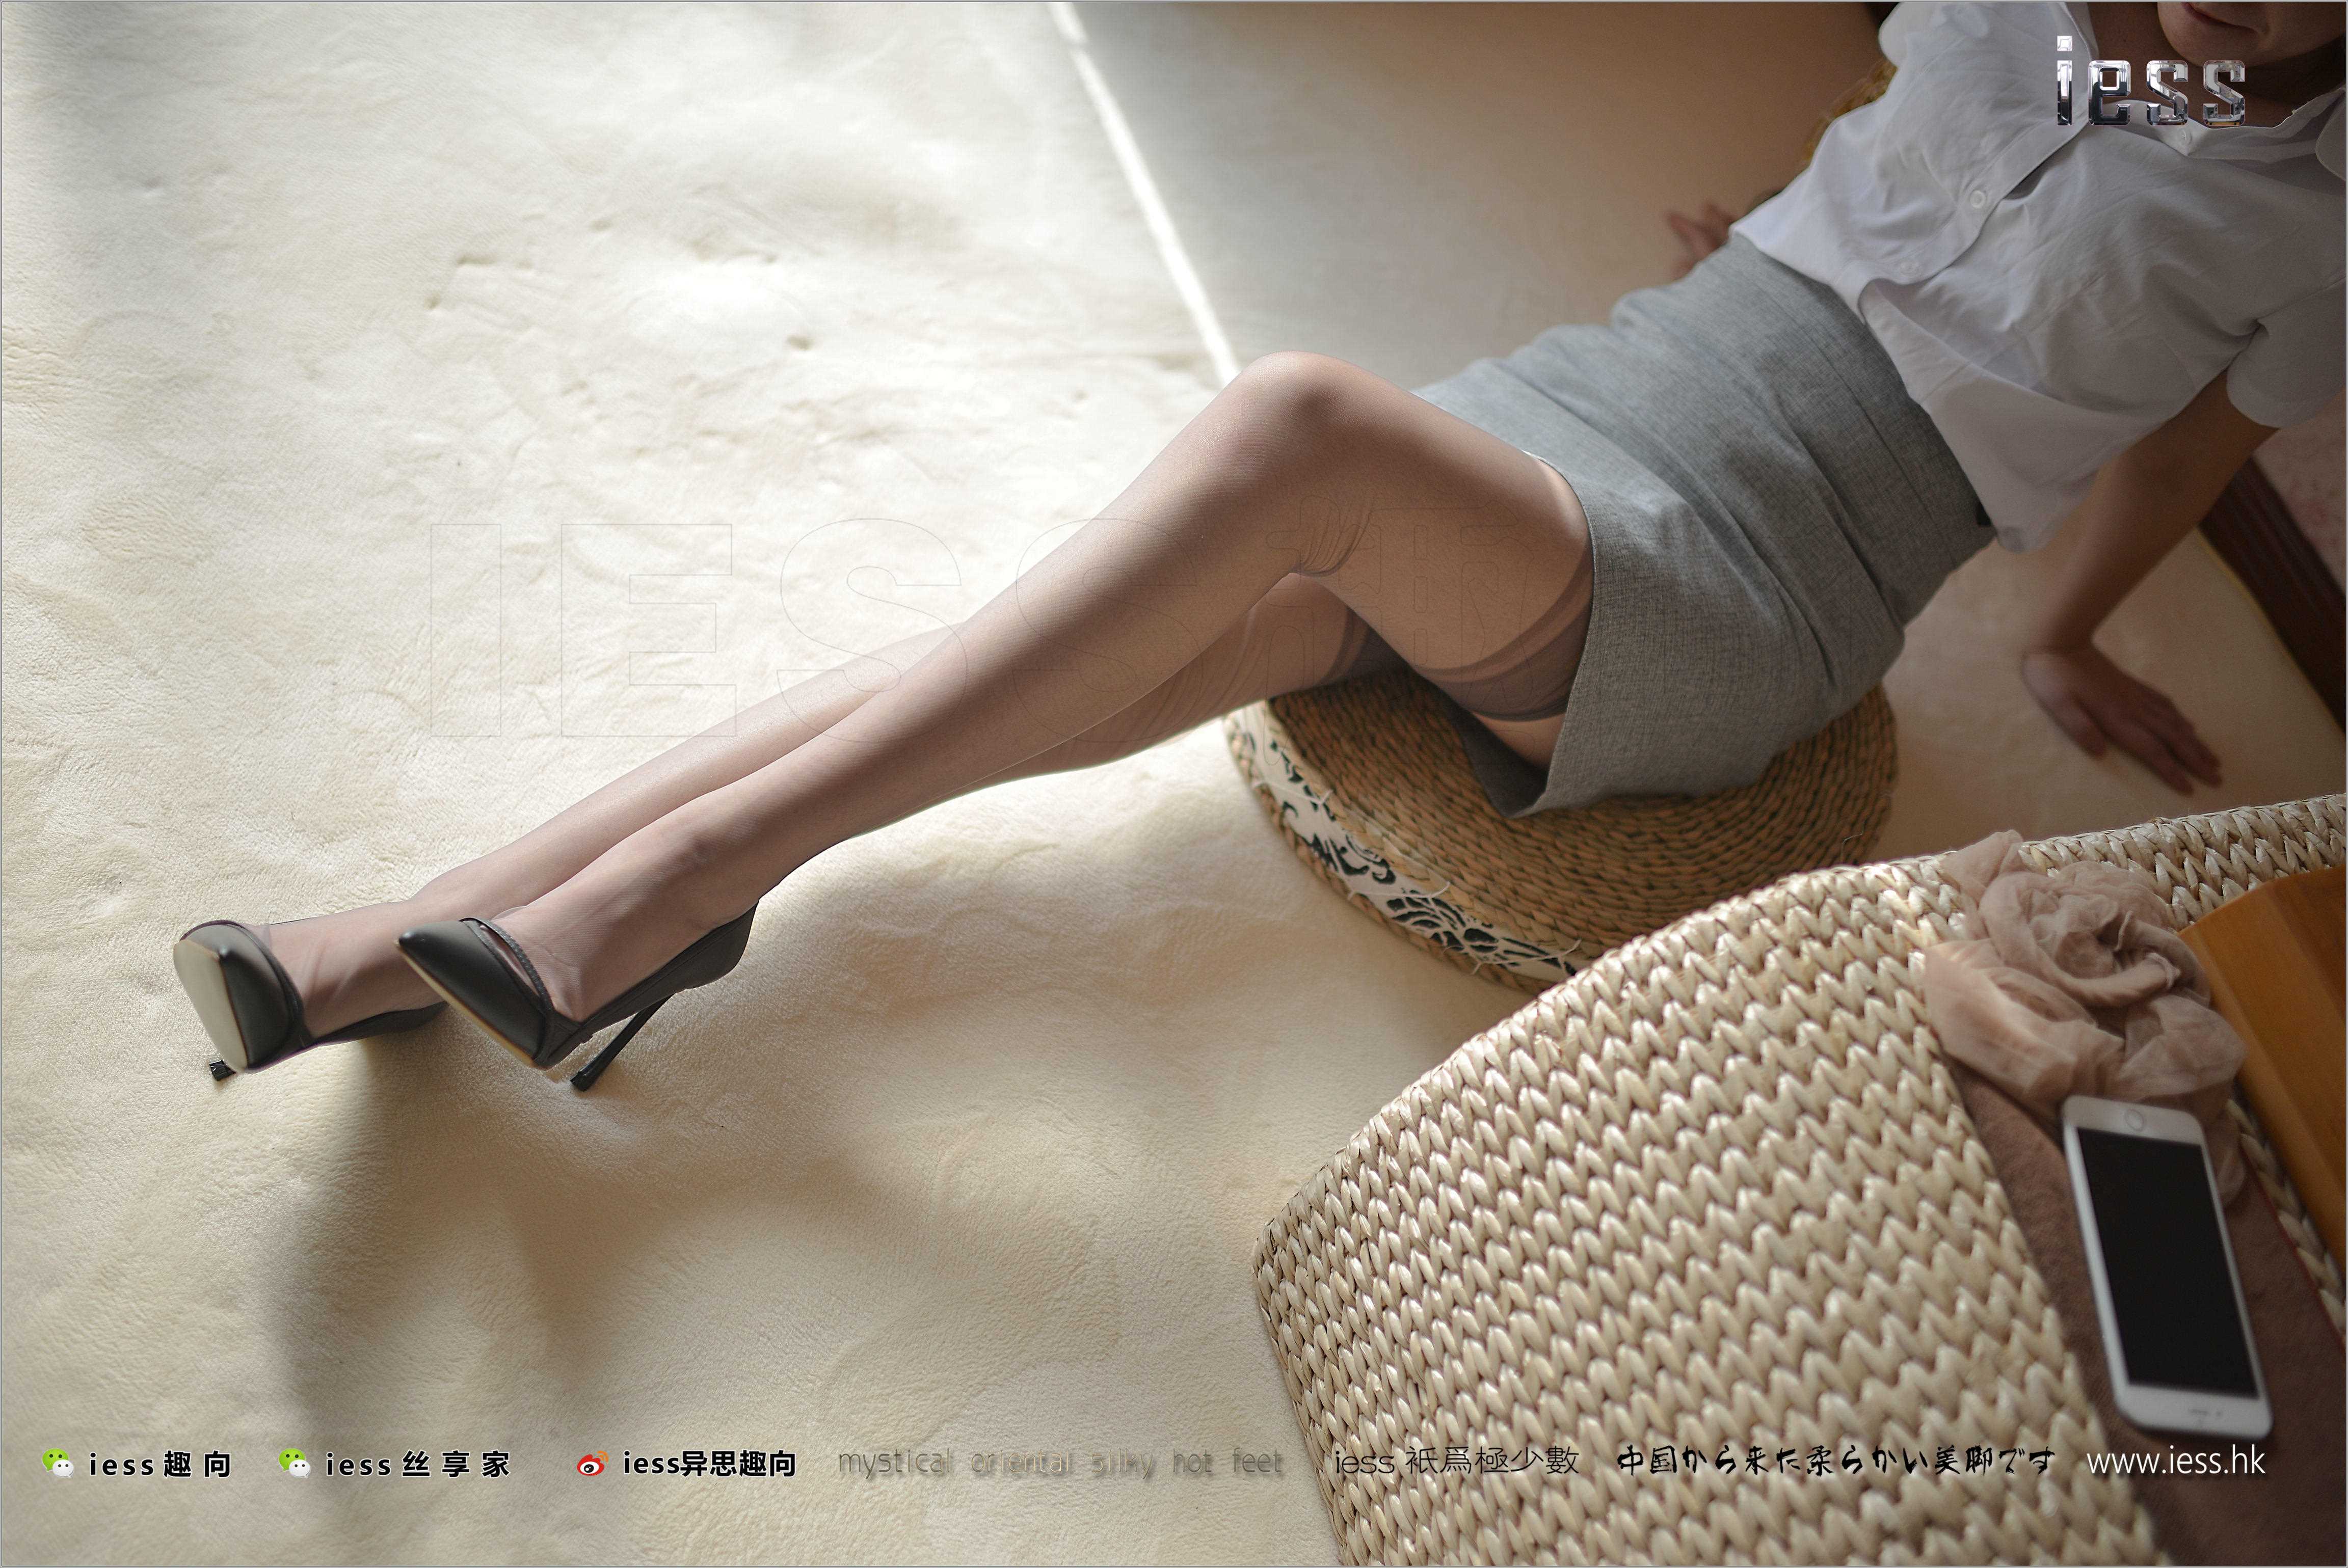 China Beauty Legs and feet 267